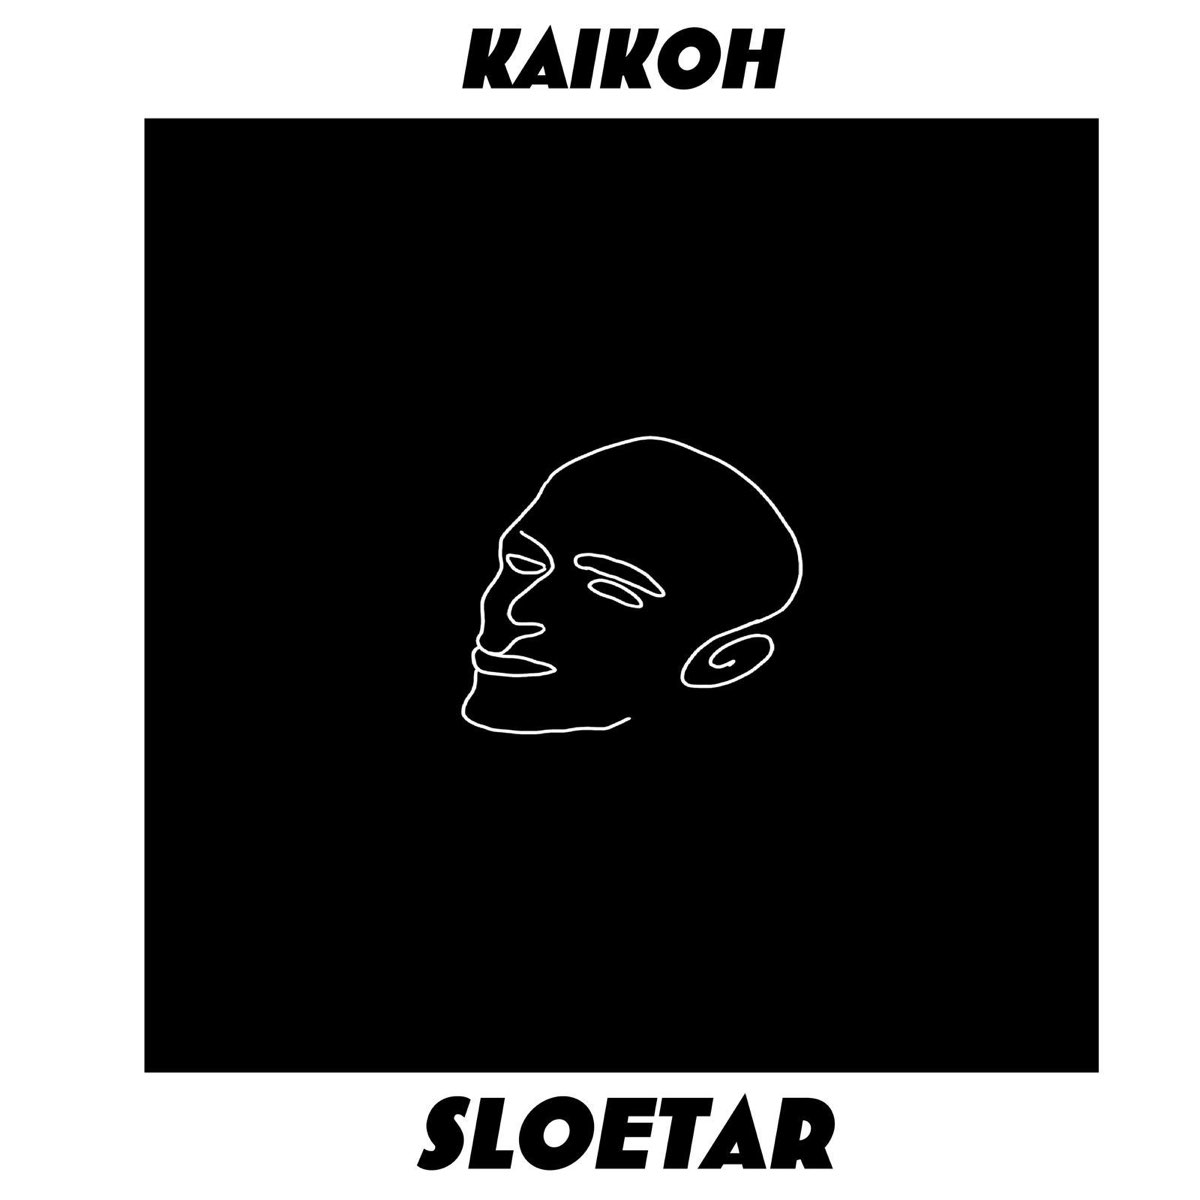 Kaikoh - Single - Album by sloe tar - Apple Music